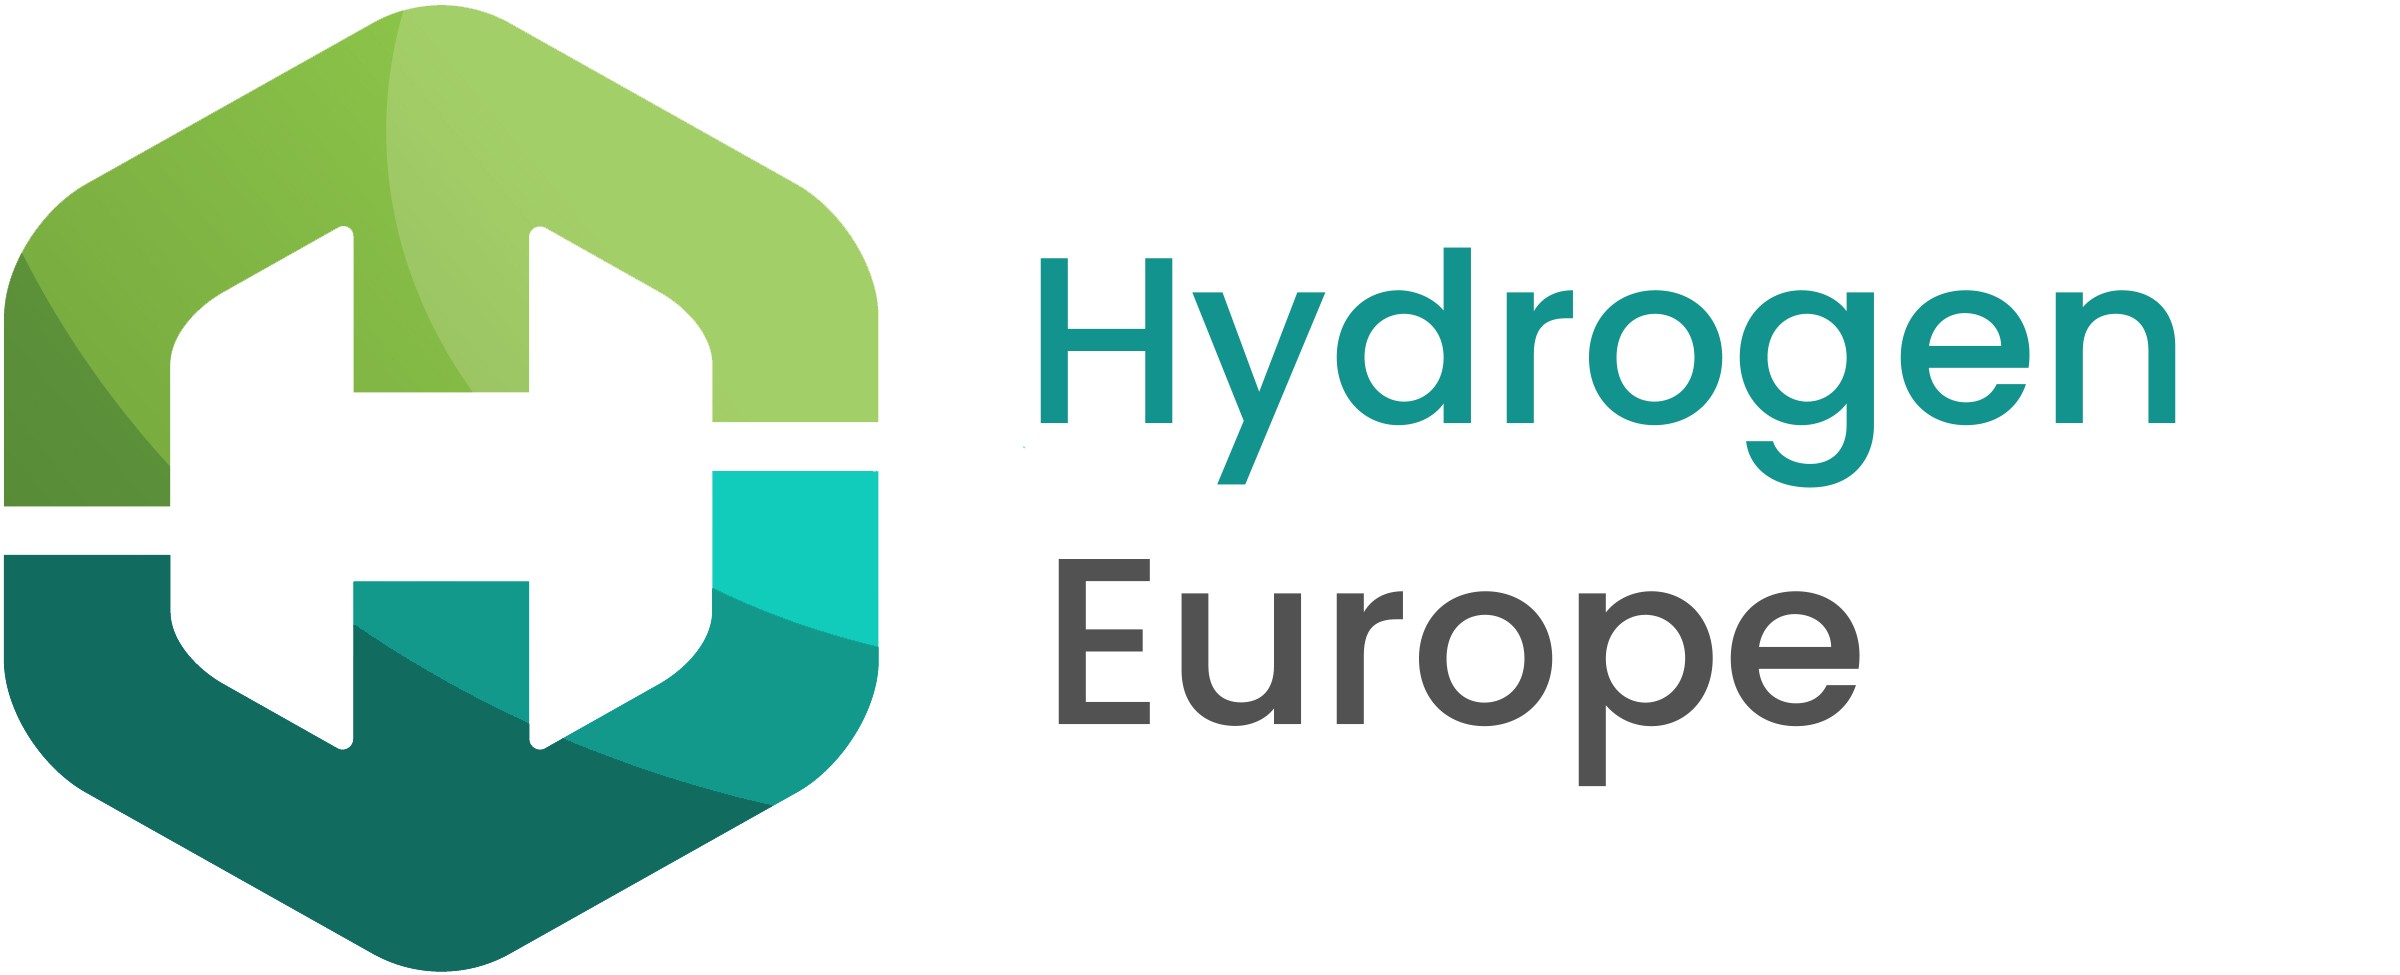 Logo Hydrogen Europe